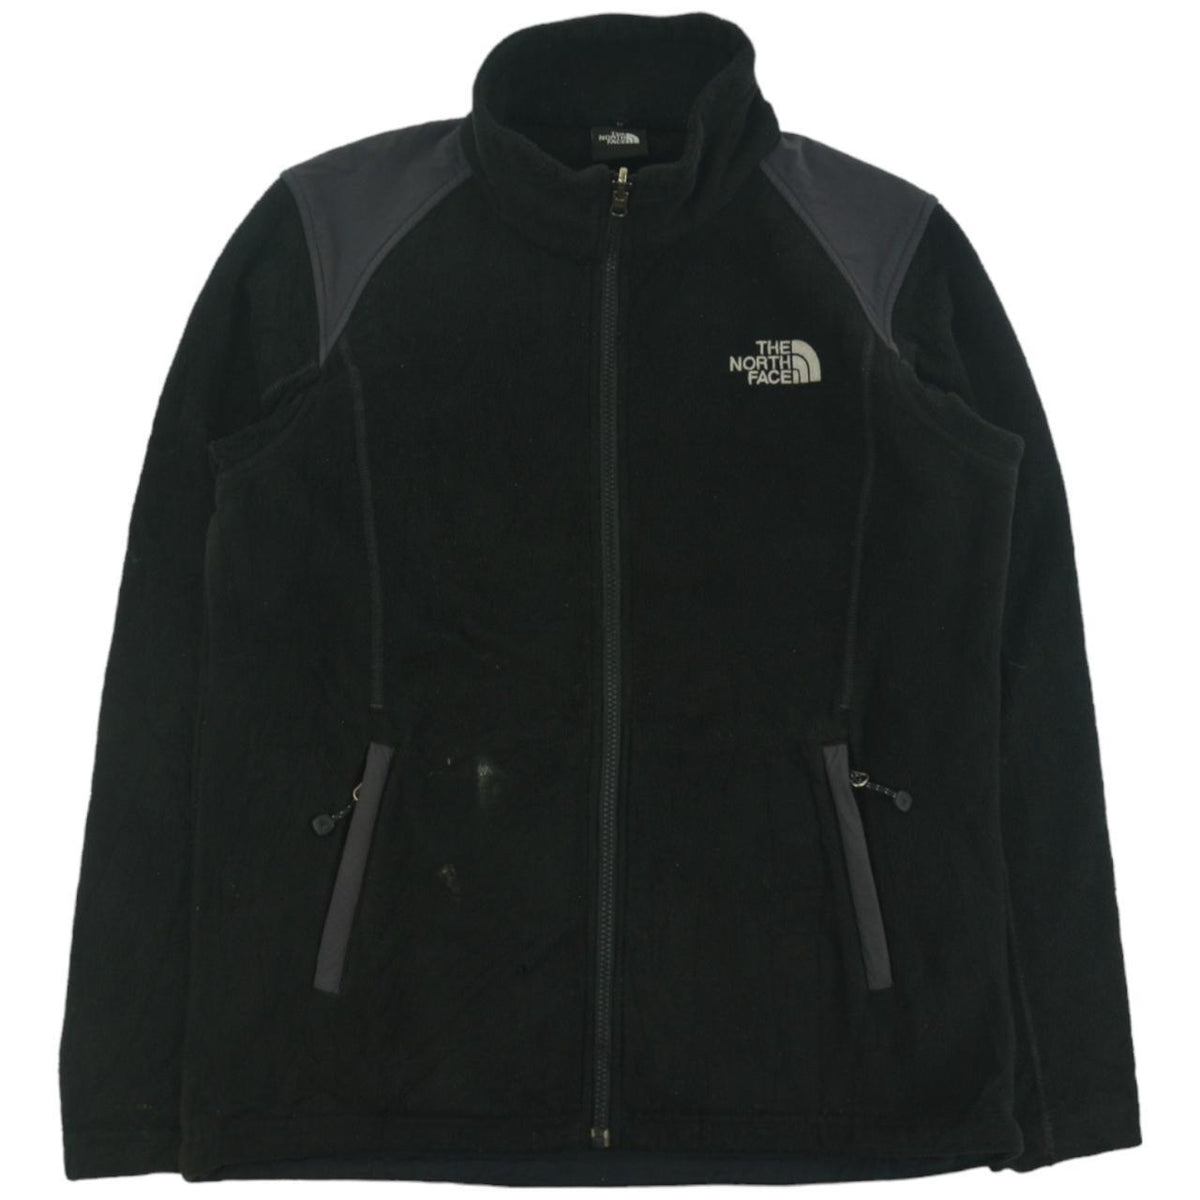 Vintage The North Face Fleece Jacket Size M